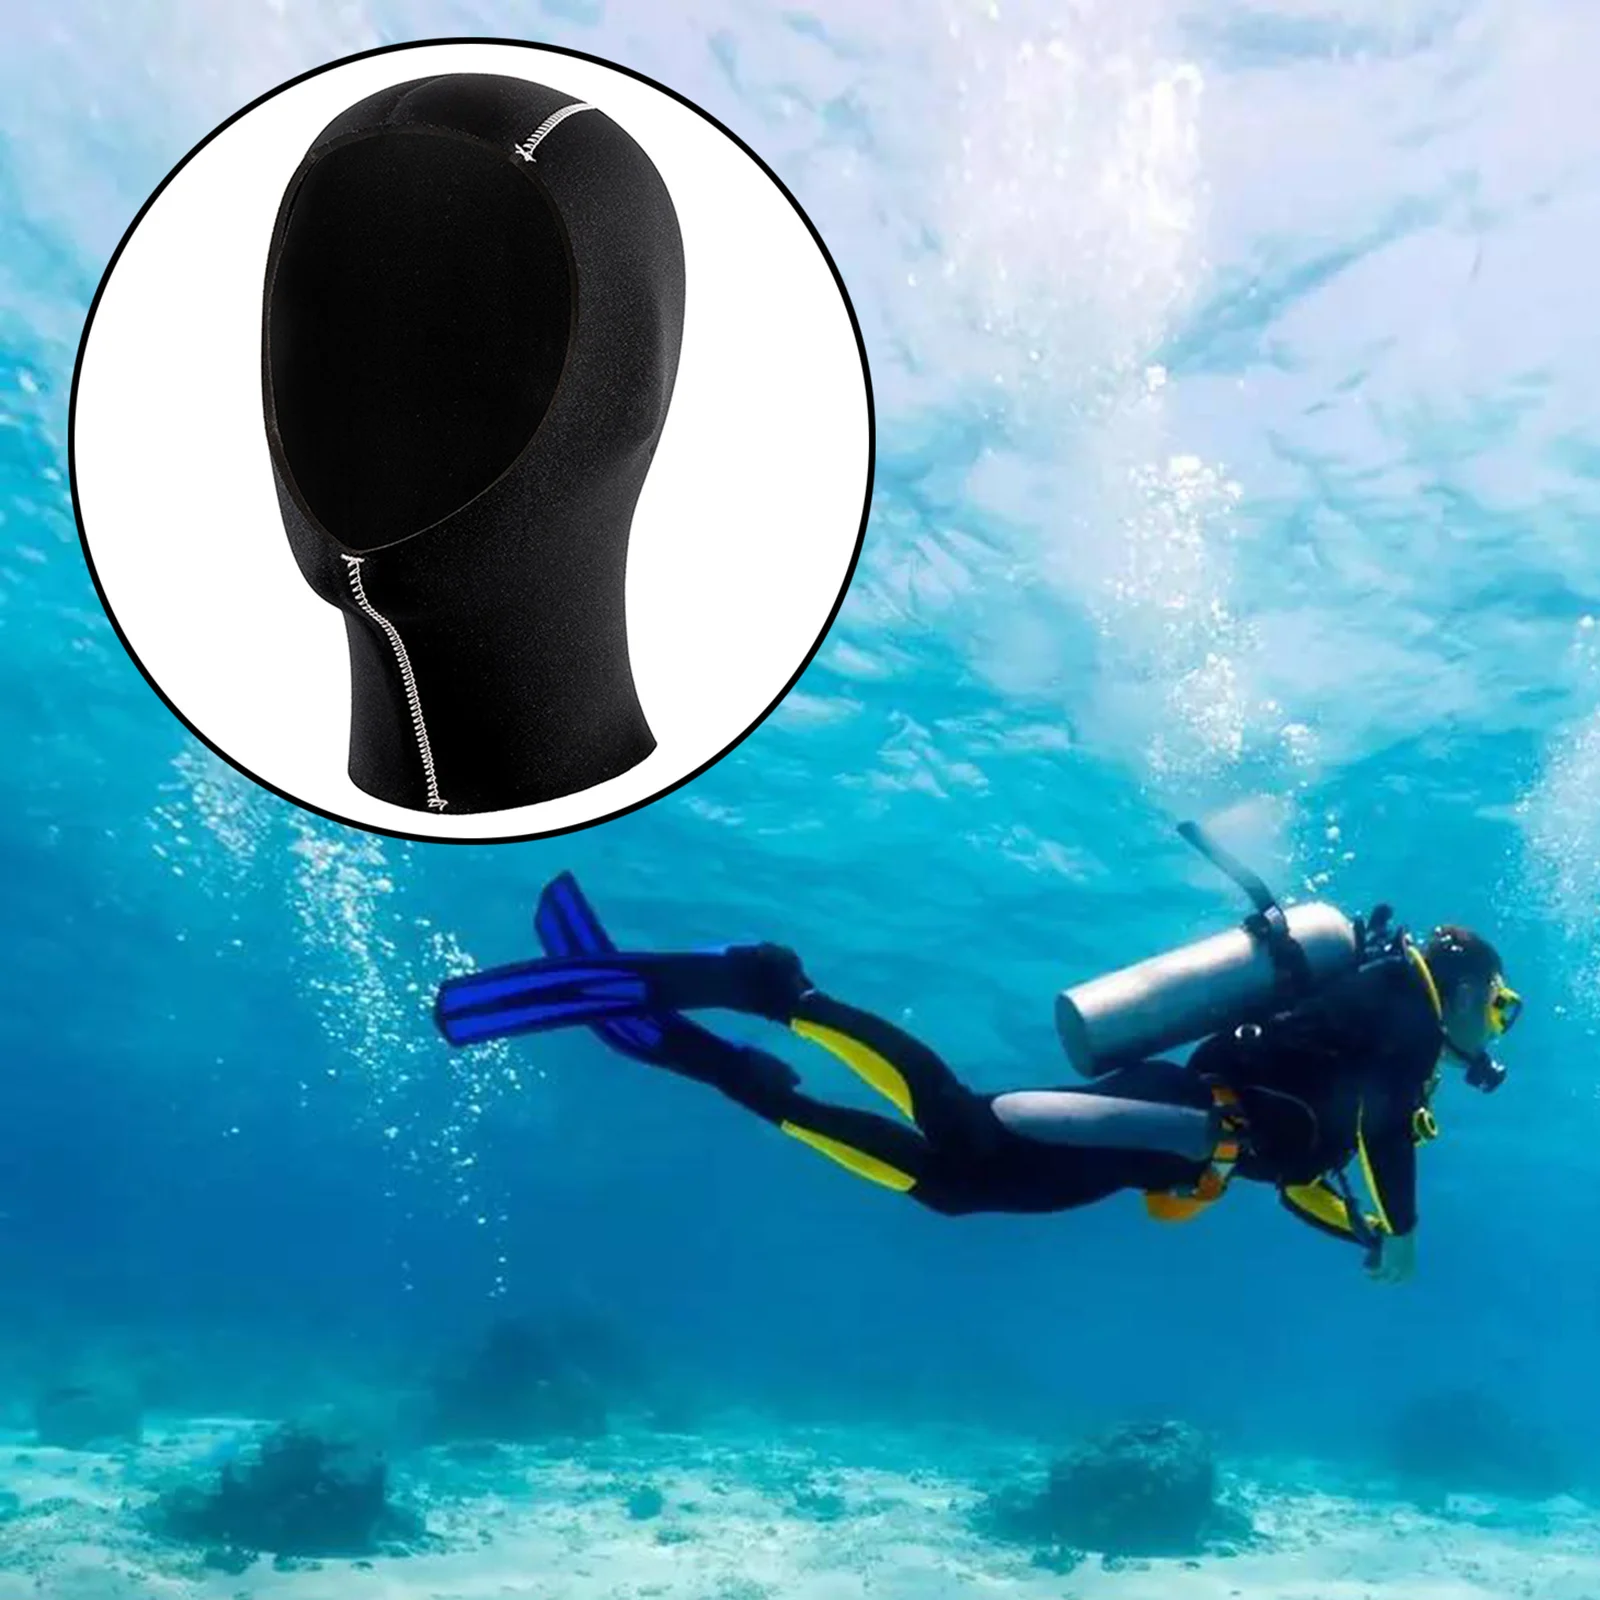 Neoprene Diving Hood Full Face Mask Keep Warm Swimming Wetsuit Hooded for Men Women Water Sports